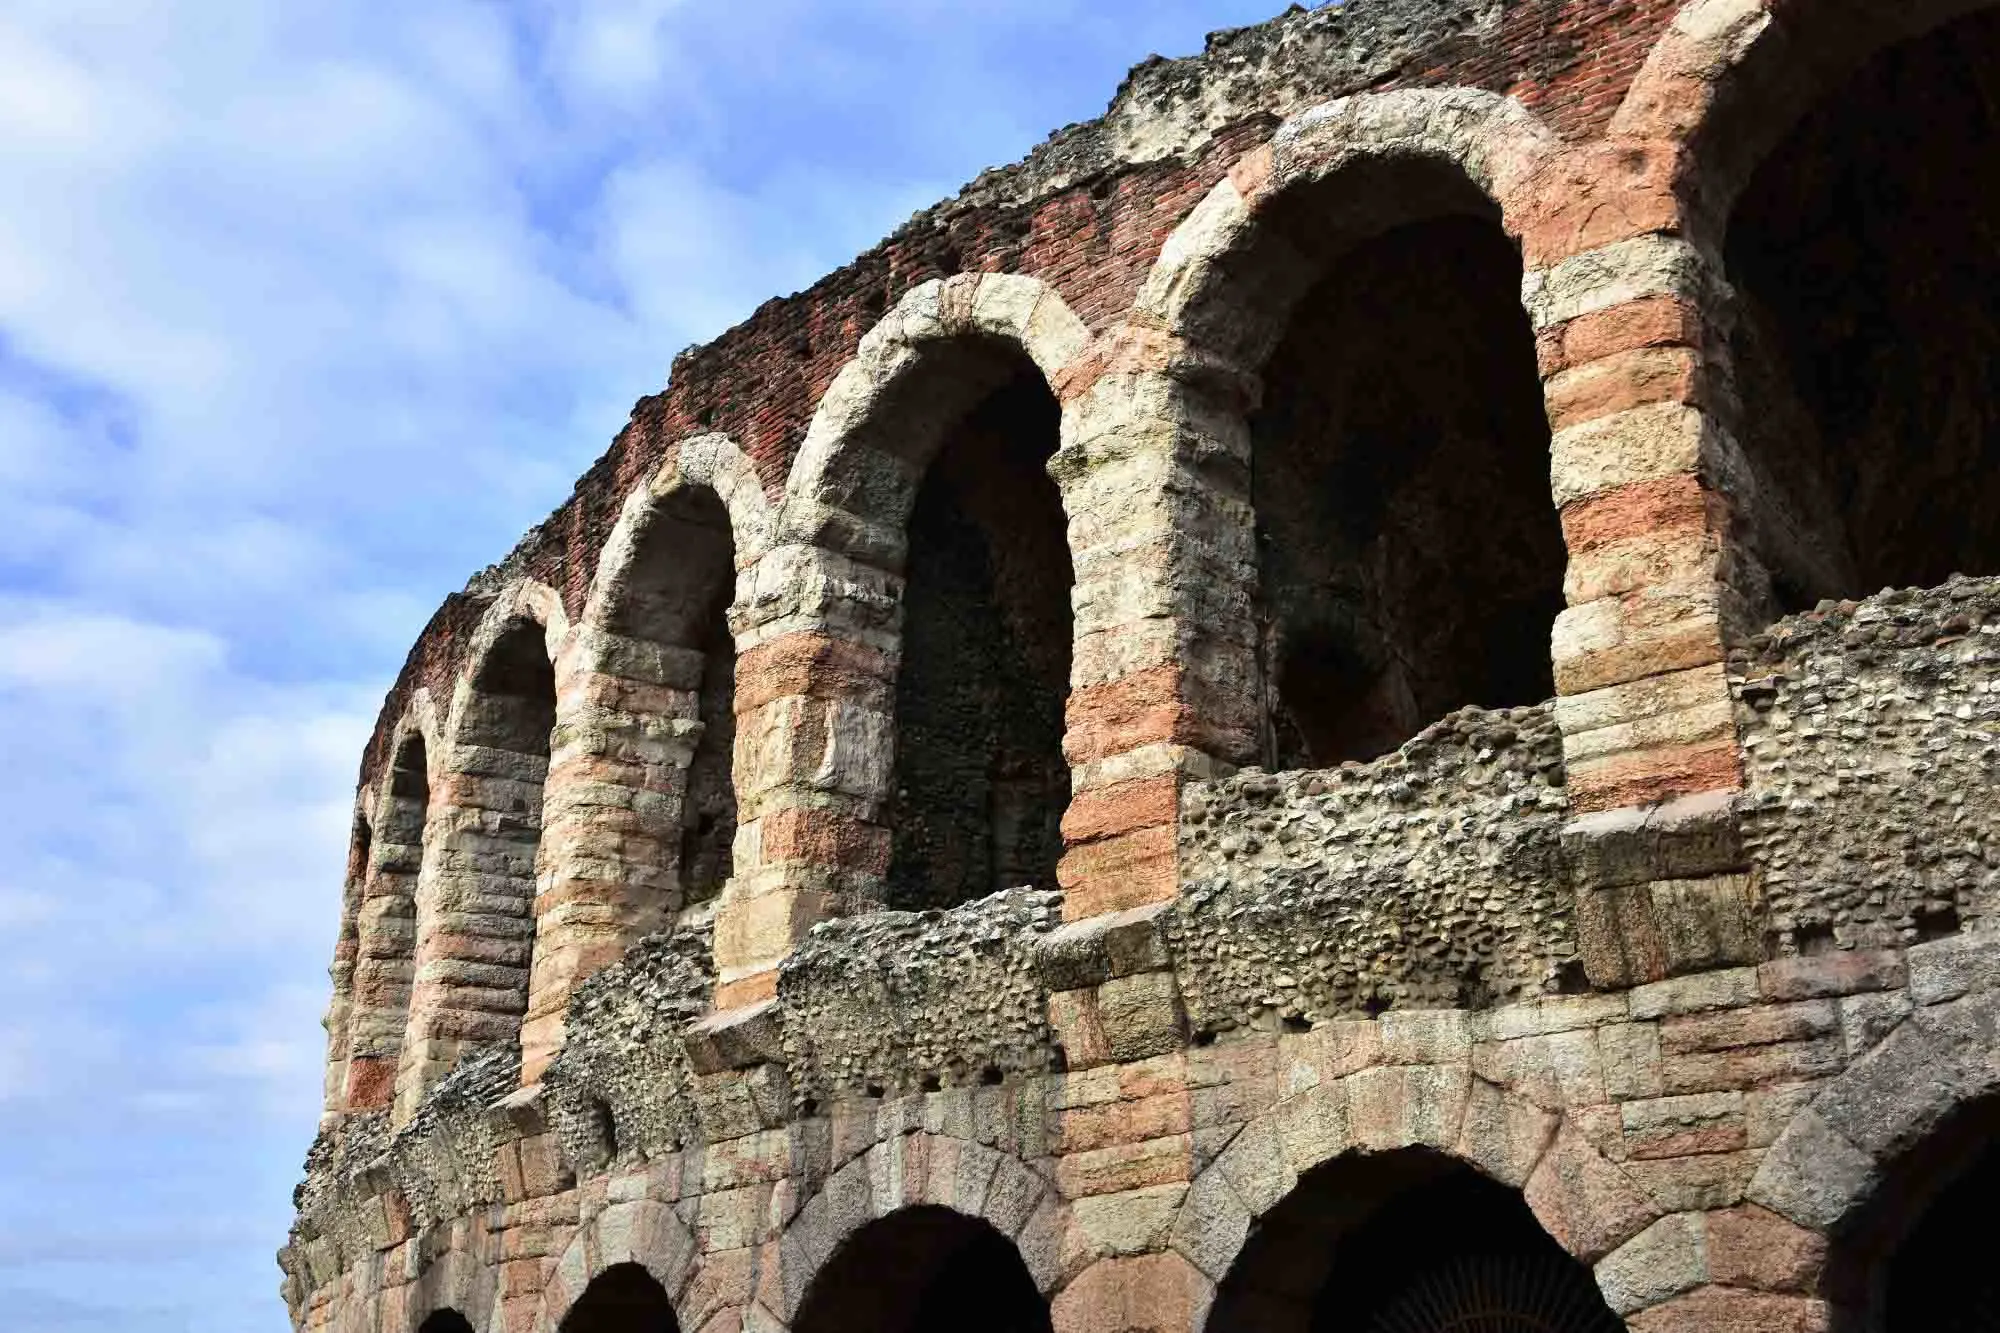 Exterior of arena in Verona, Italy